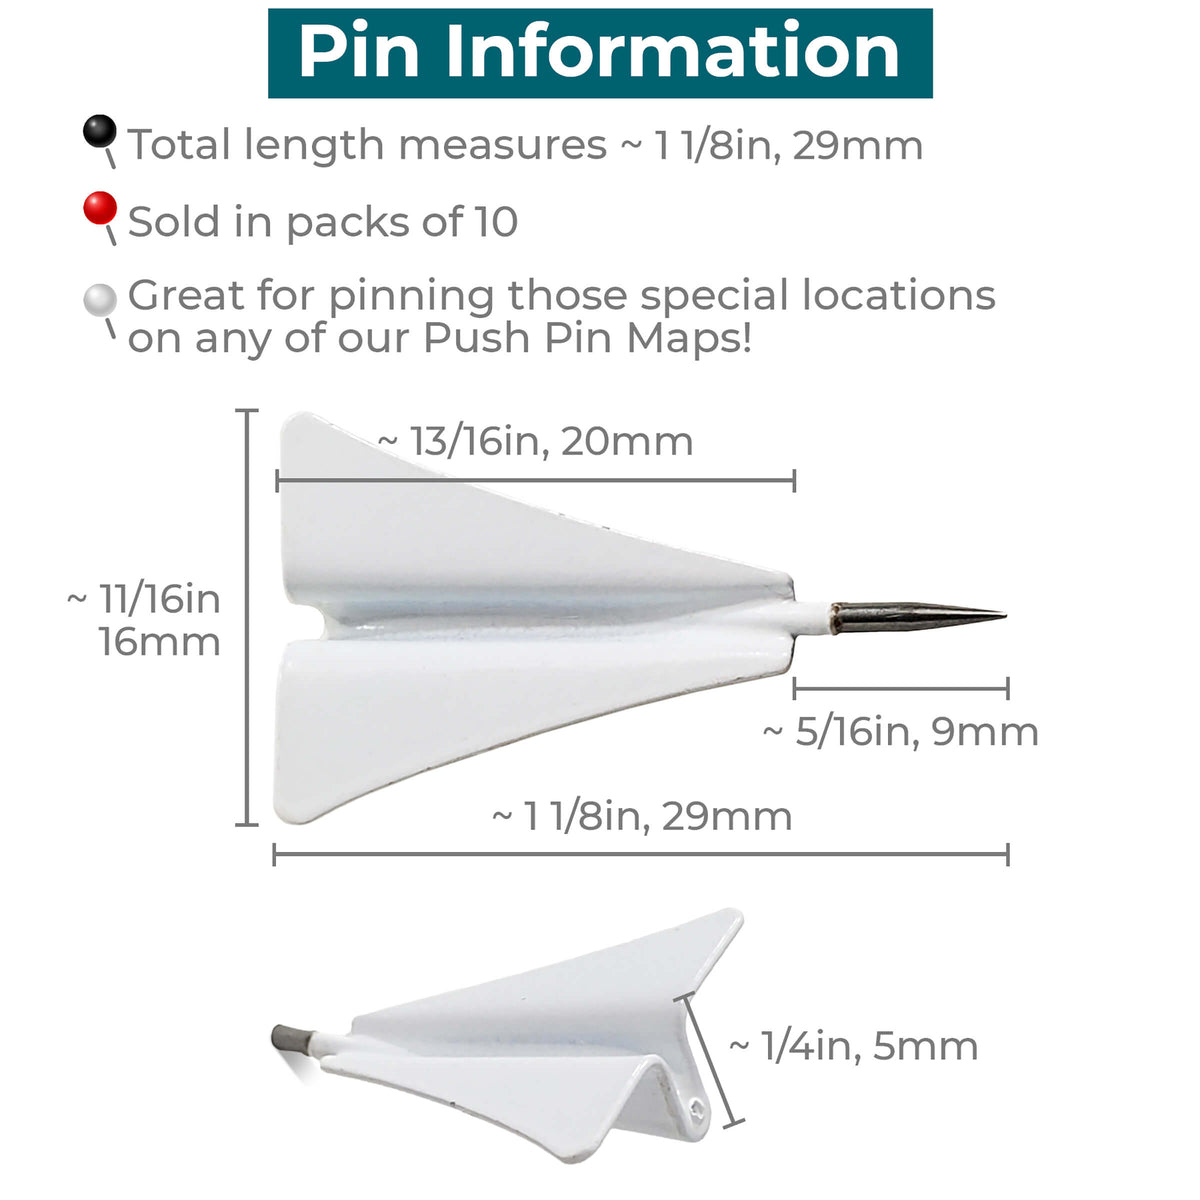 Dimensions of White Metal Paper Plane Shaped Push Pin Tacks